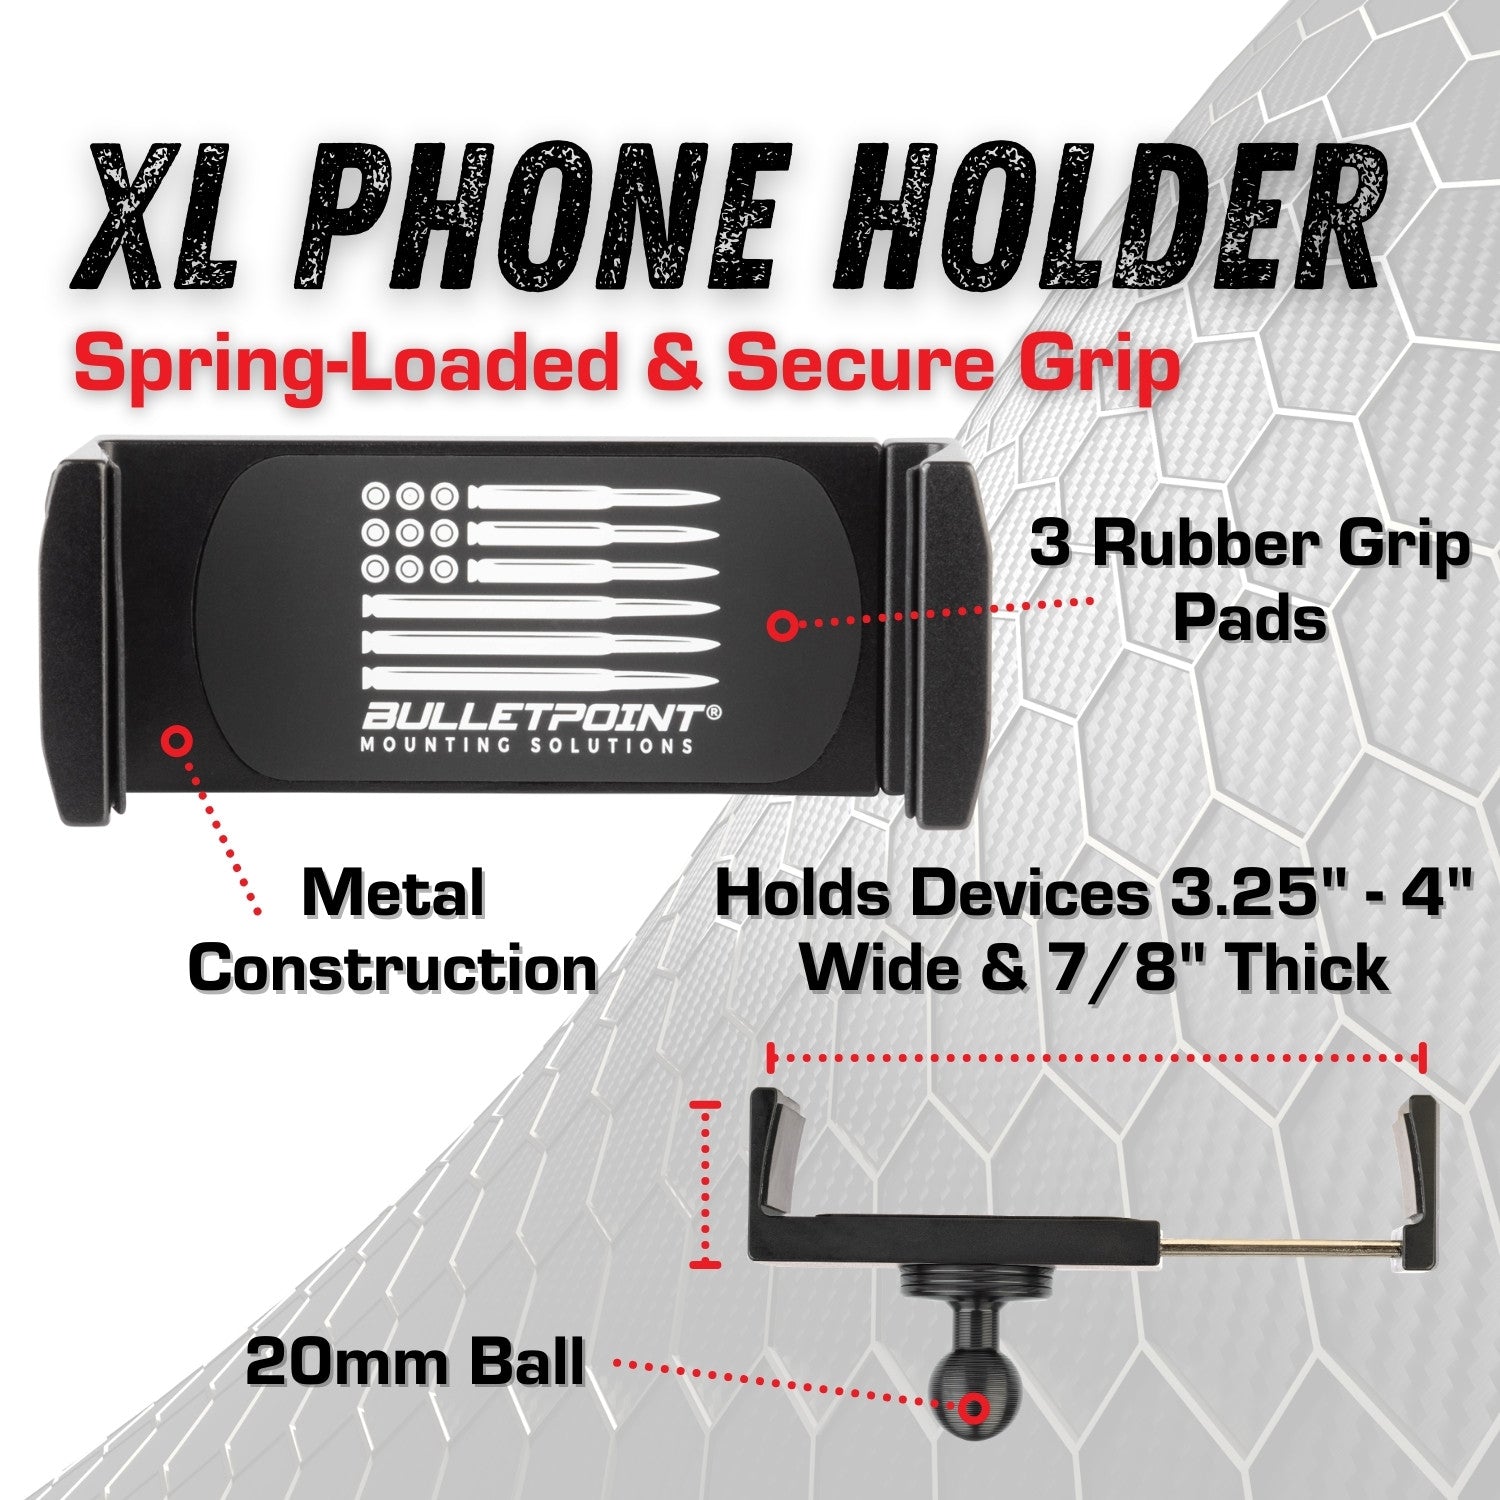 XL Universal Phone Mount Holder for Oversized Bulky Cases